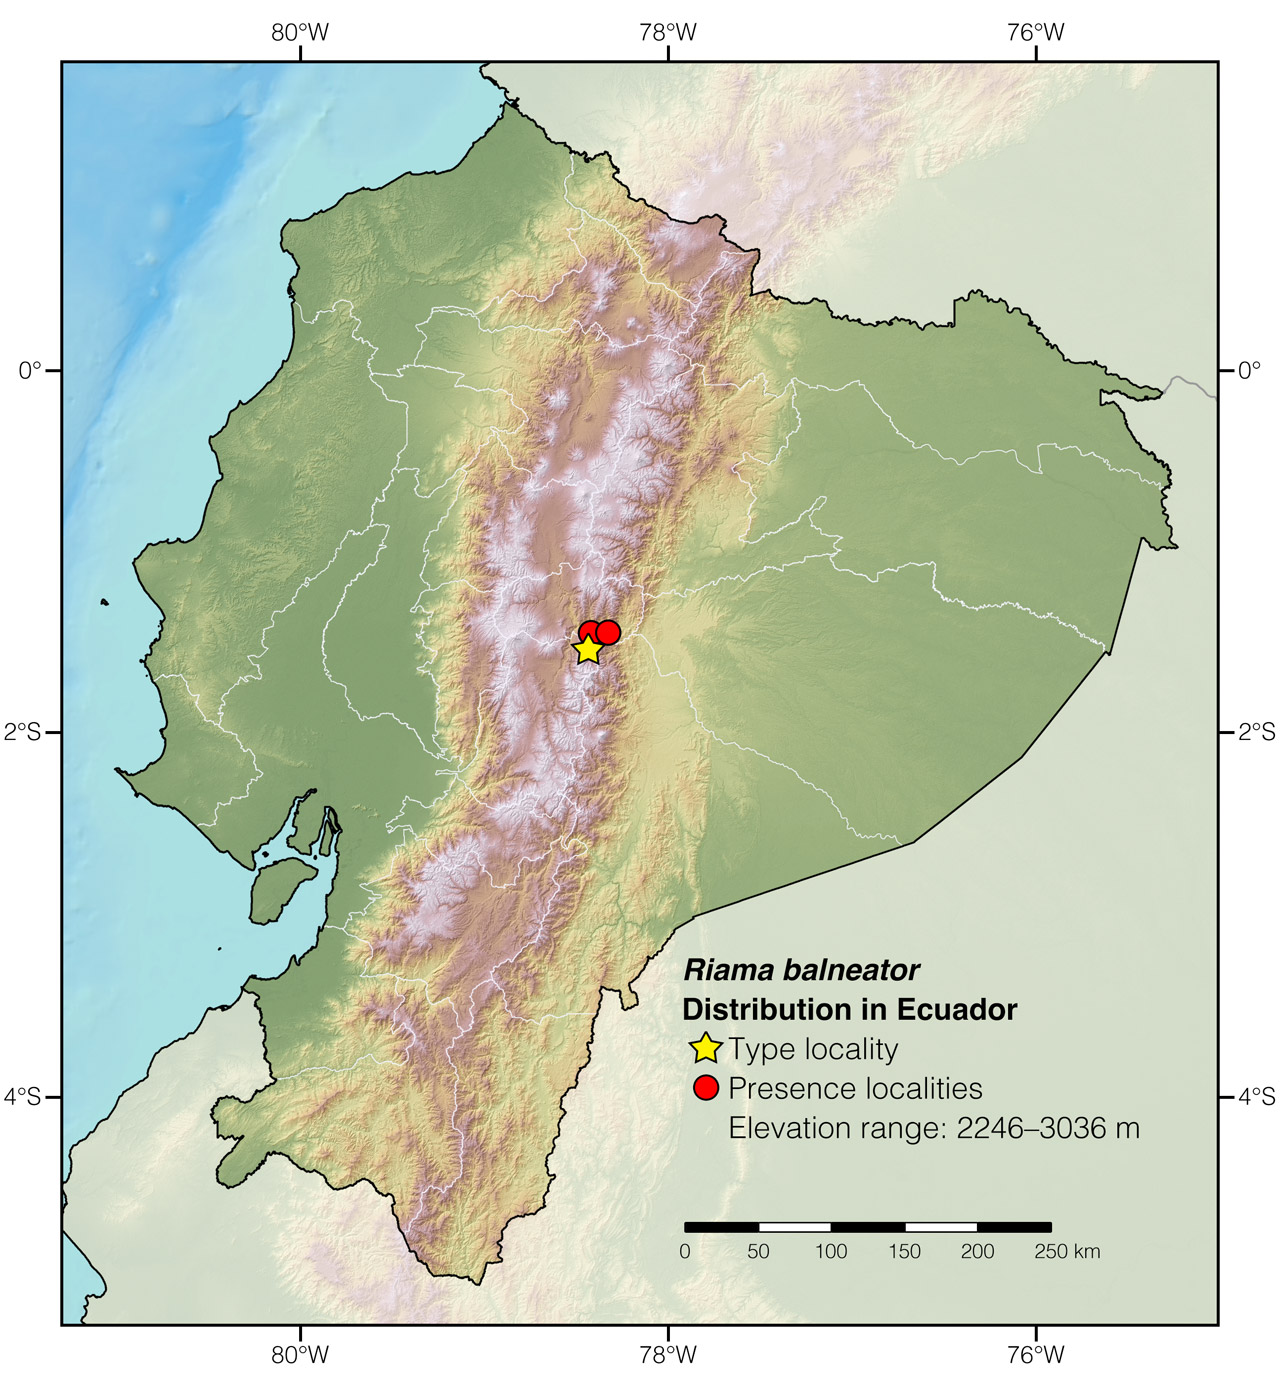 Distribution of Riama balneator in Ecuador